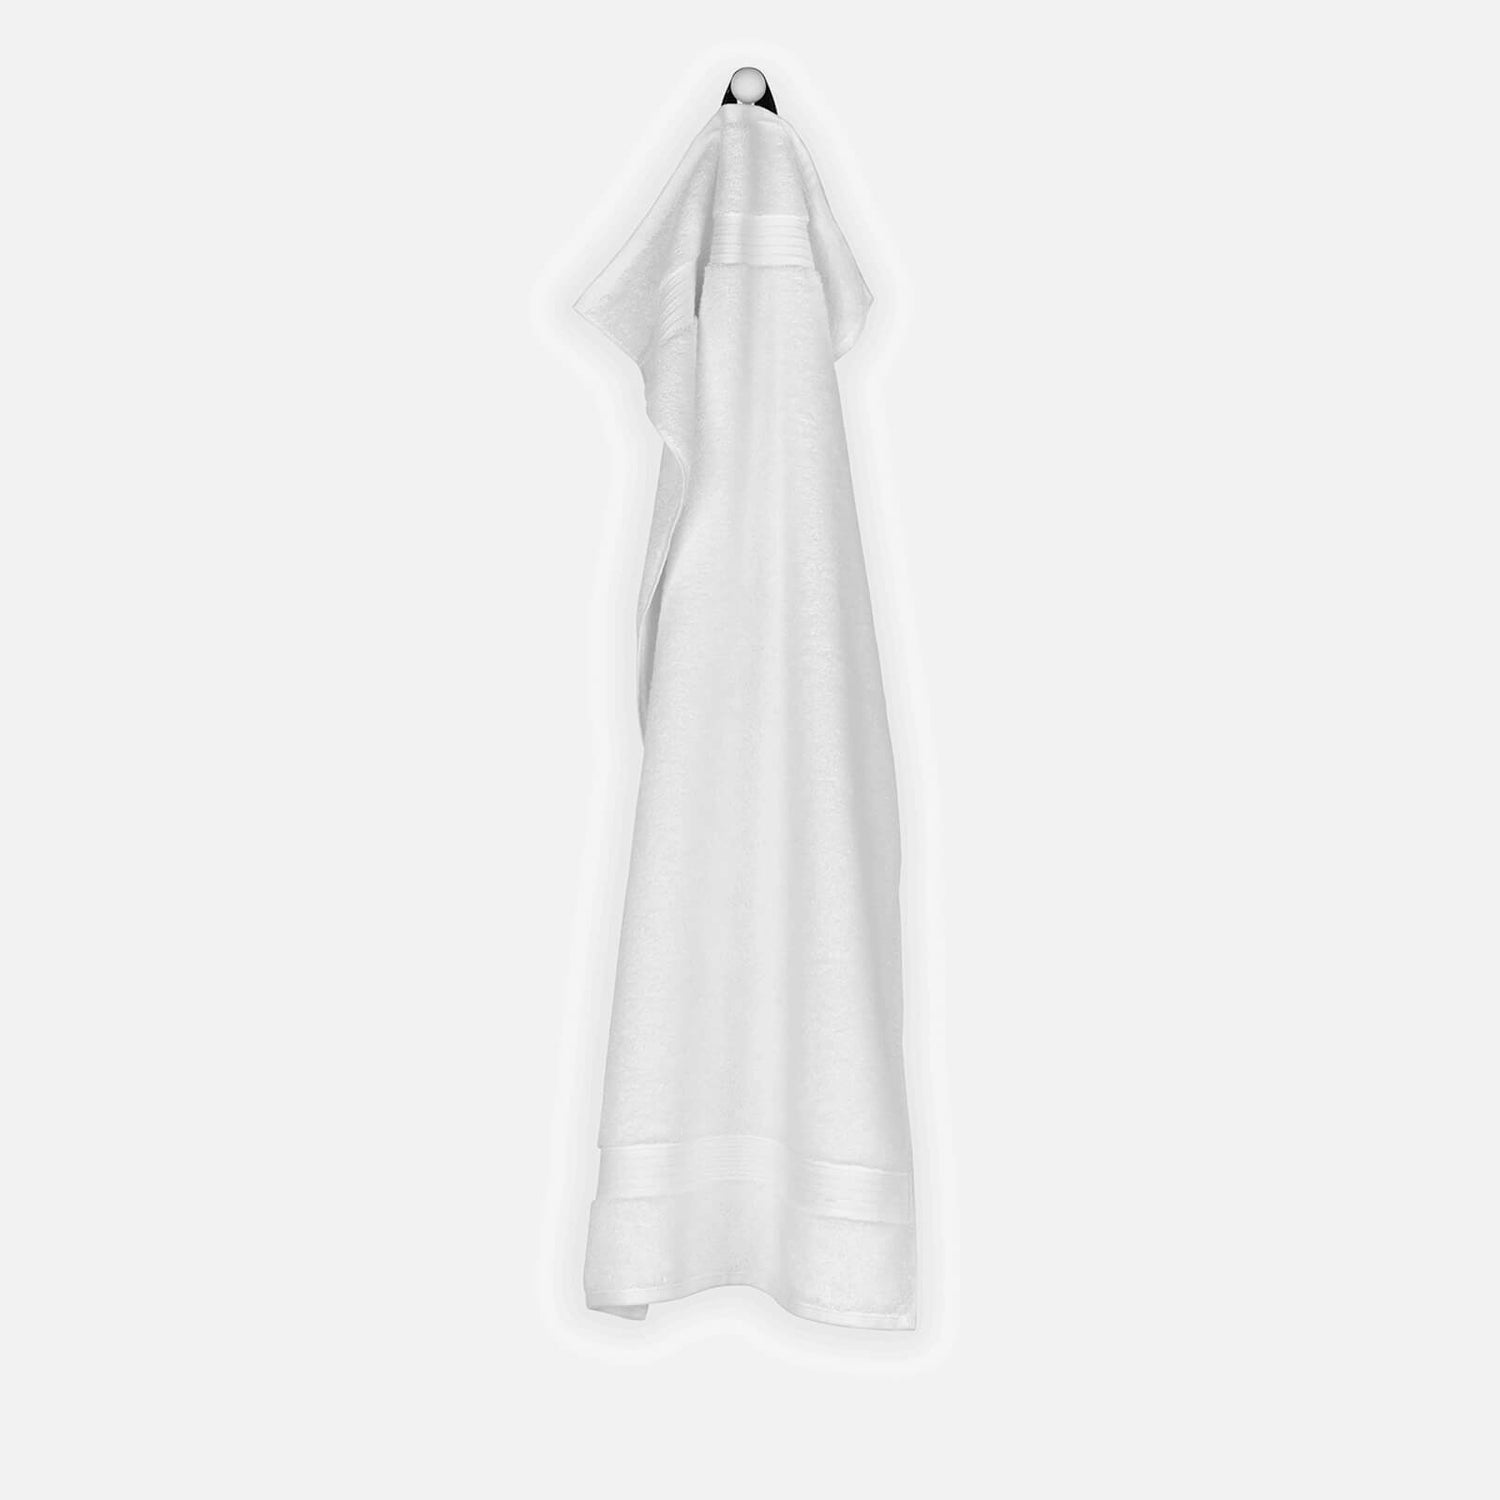 Christy Supreme Super Soft Towel - White - Set of 2 - Bath Sheet 90 x 165cm